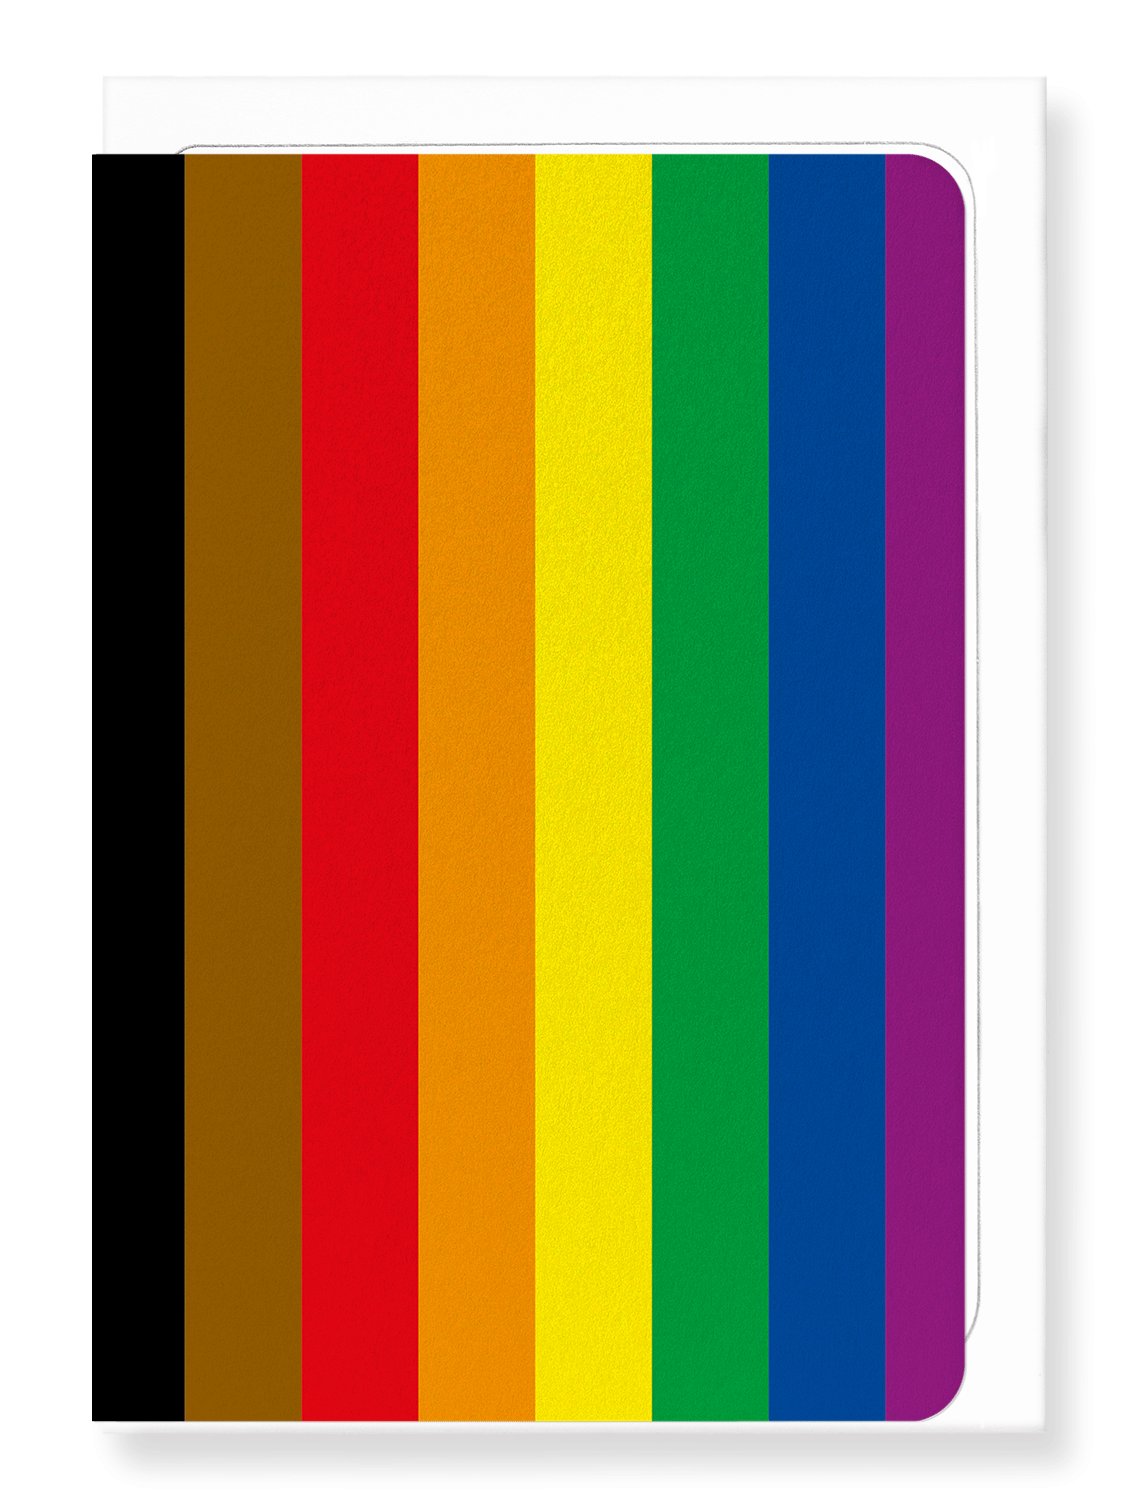 Ezen Designs - POC (Person of colour) flag - Greeting Card - Front